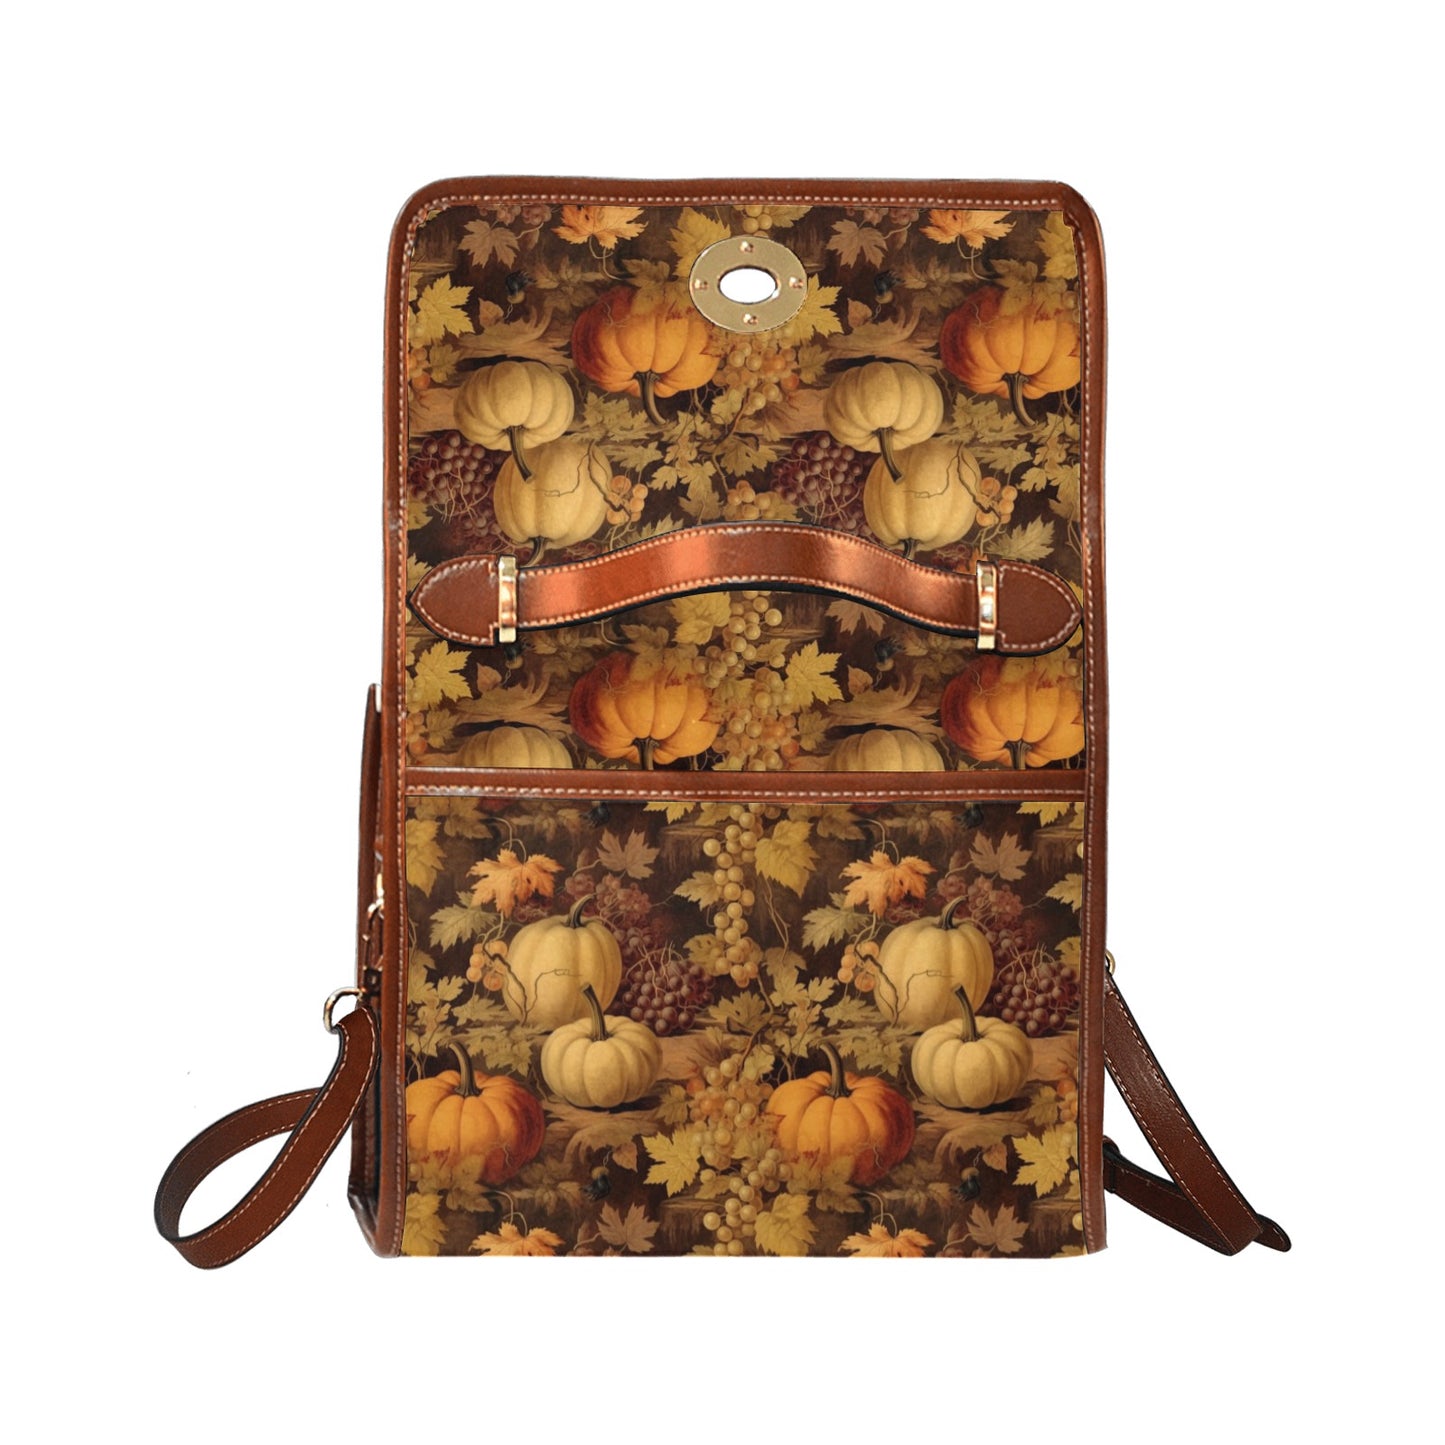 Autumn Fall Canvas Satchel bag, Vintage Pumpkins Grapes Waterproof Cottagecore Brown Cute Women Crossbody Purse Vegan Leather Strap Handbag Starcove Fashion